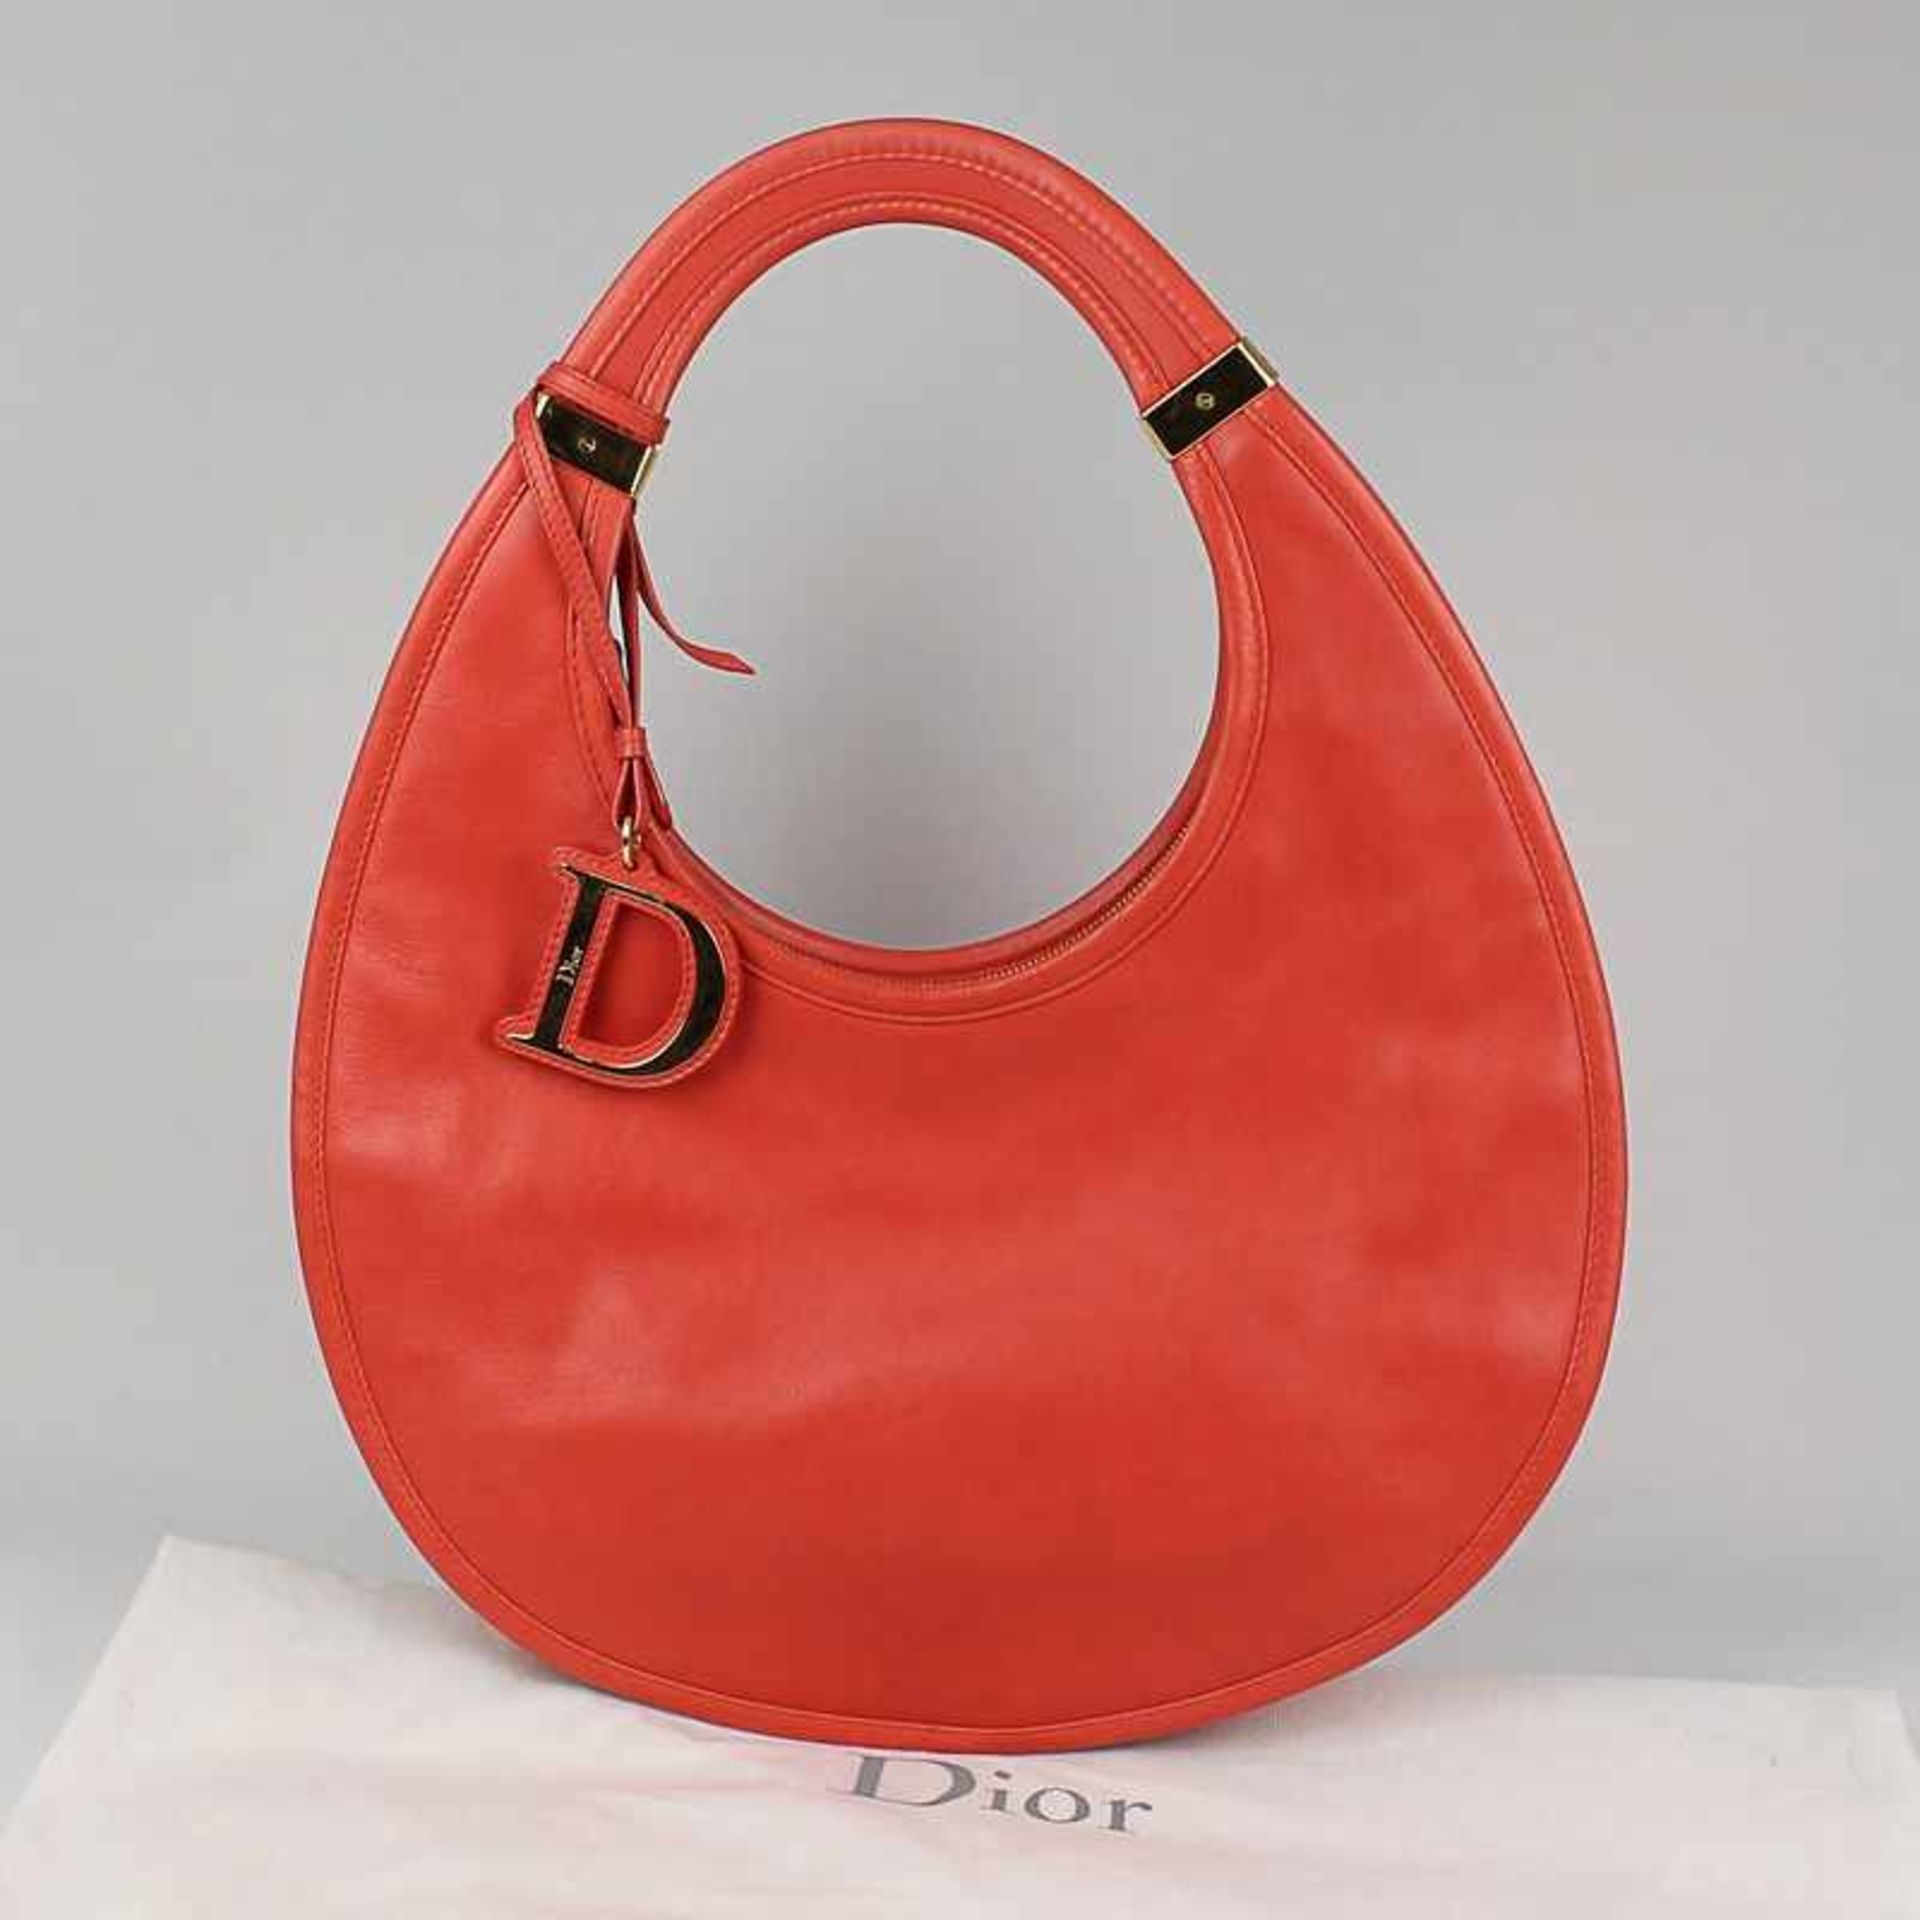 Christian Dior - Handtasche 1980er Jahre, Christian Dior, Paris, Made in Italy, Vintage,